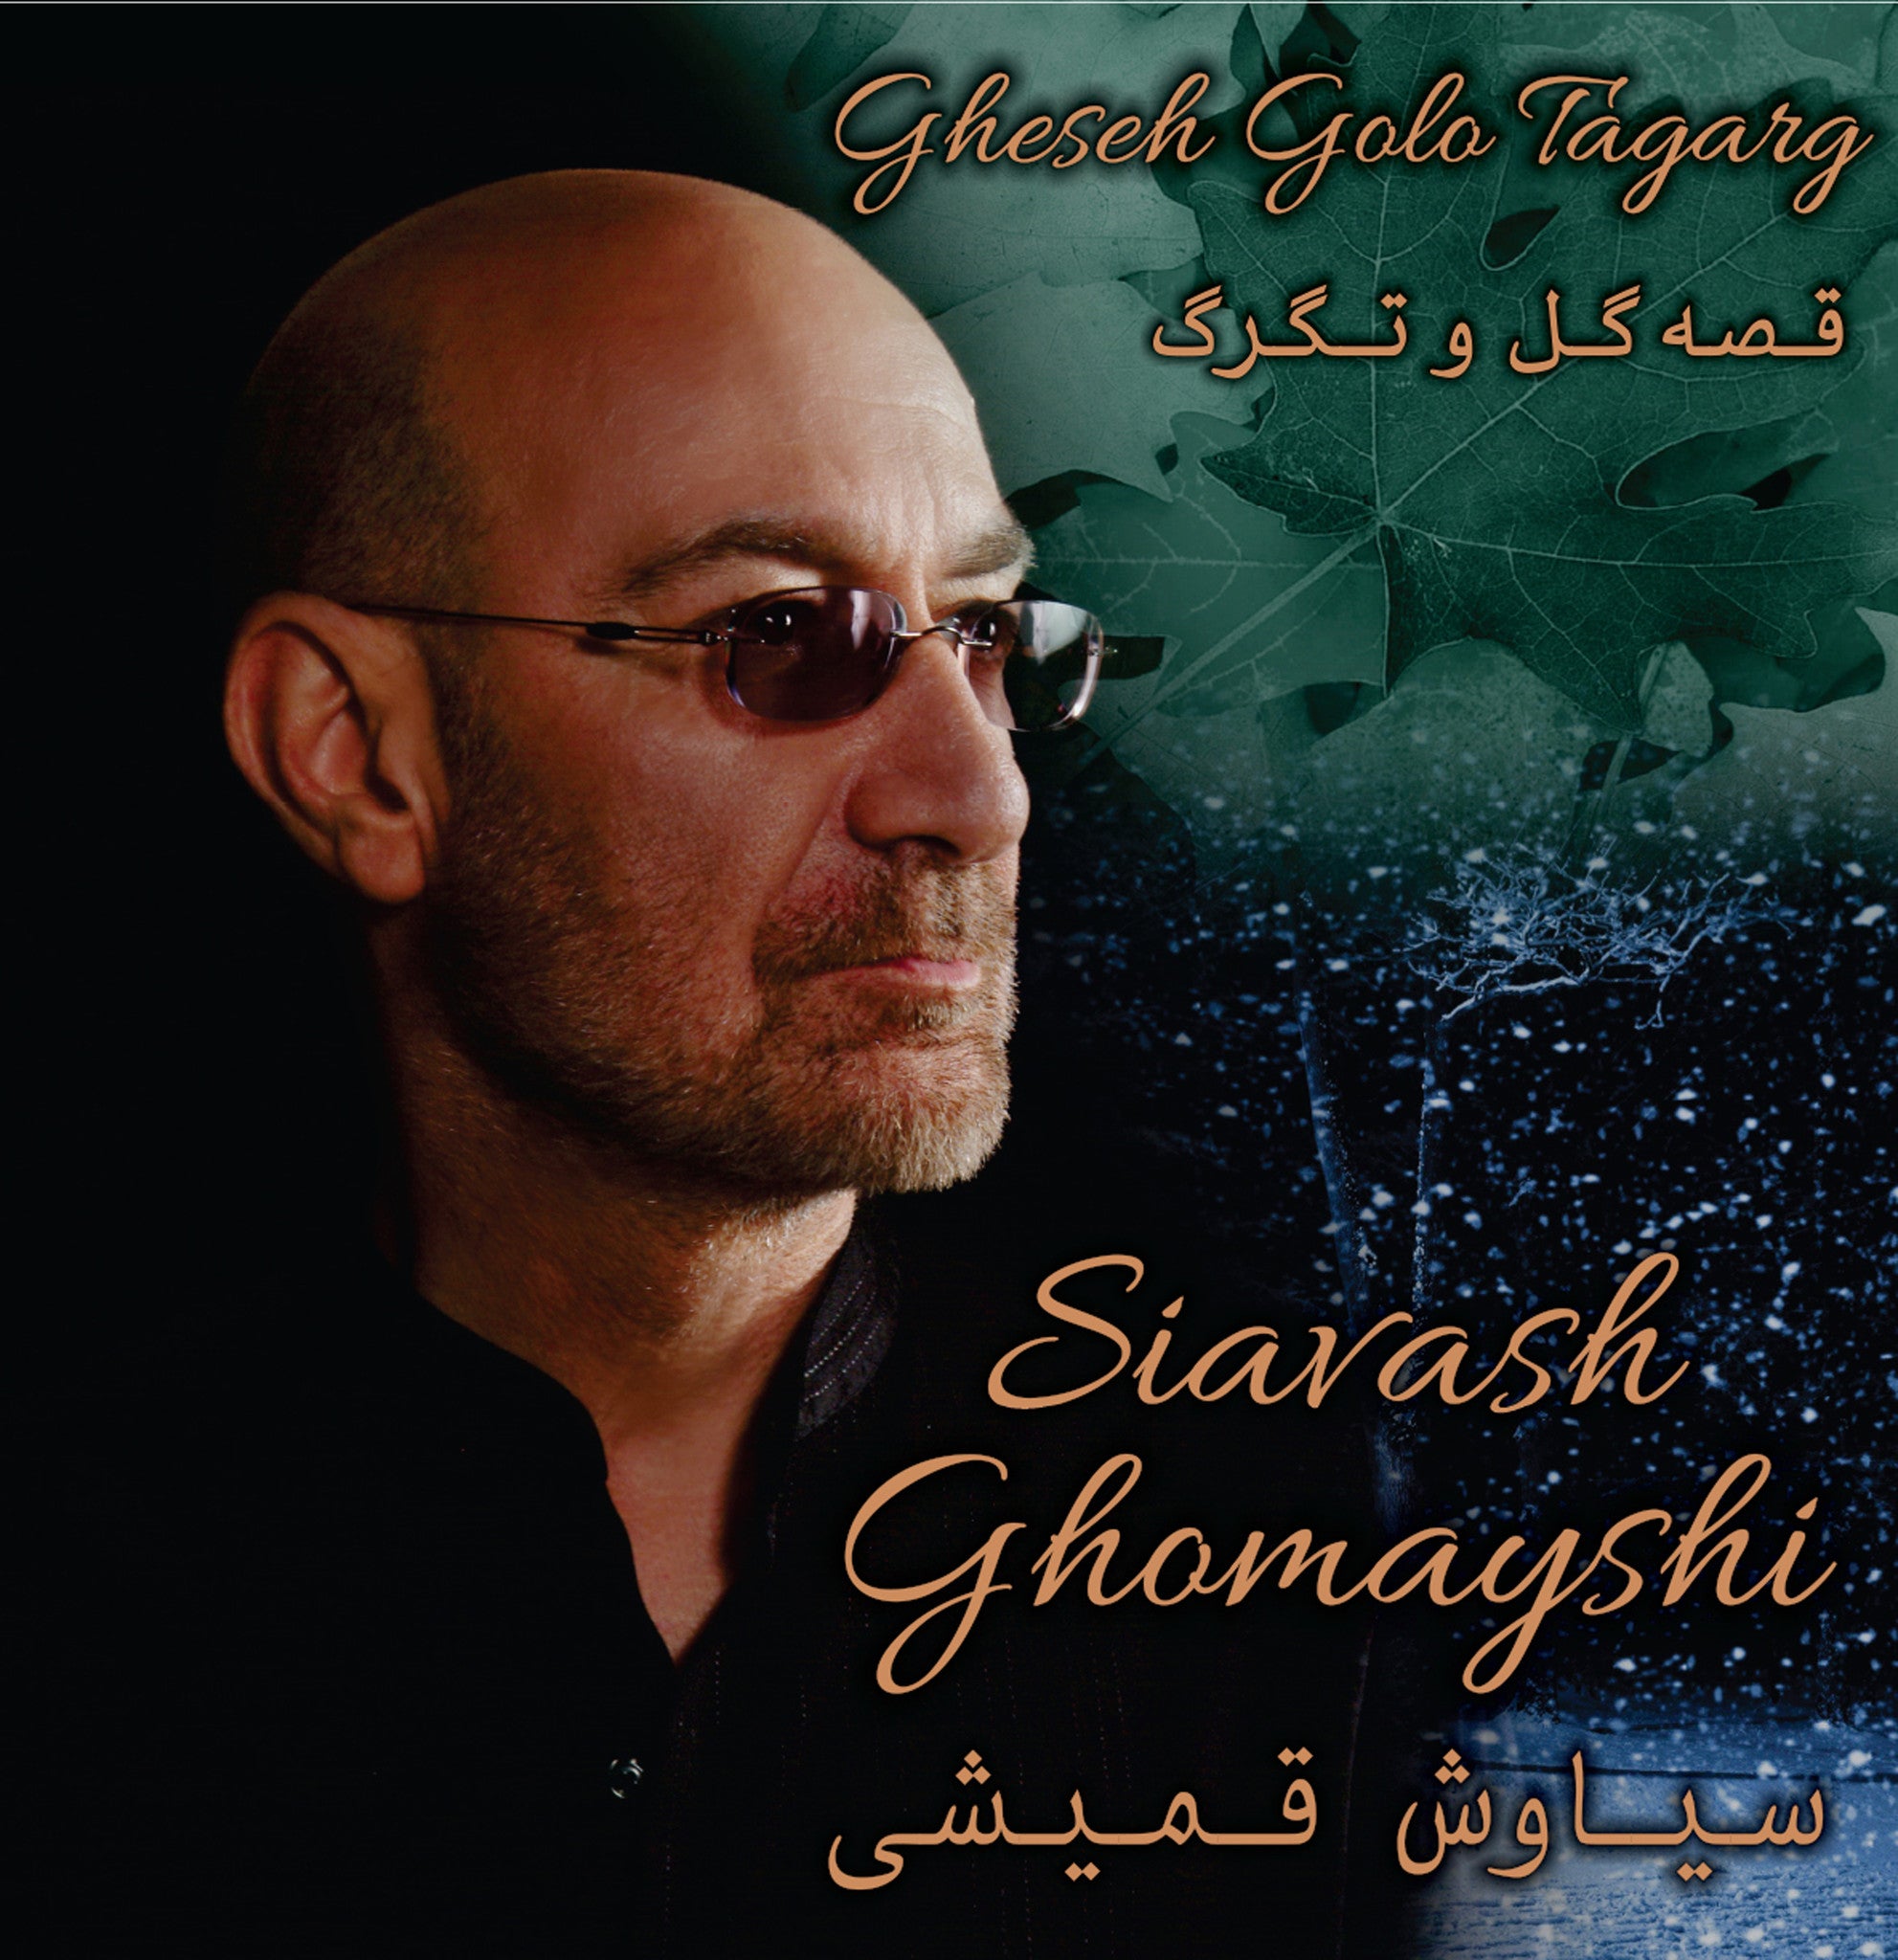 Siavash Ghomayshi - Gheseh Golo Tagarg (Vinyl)